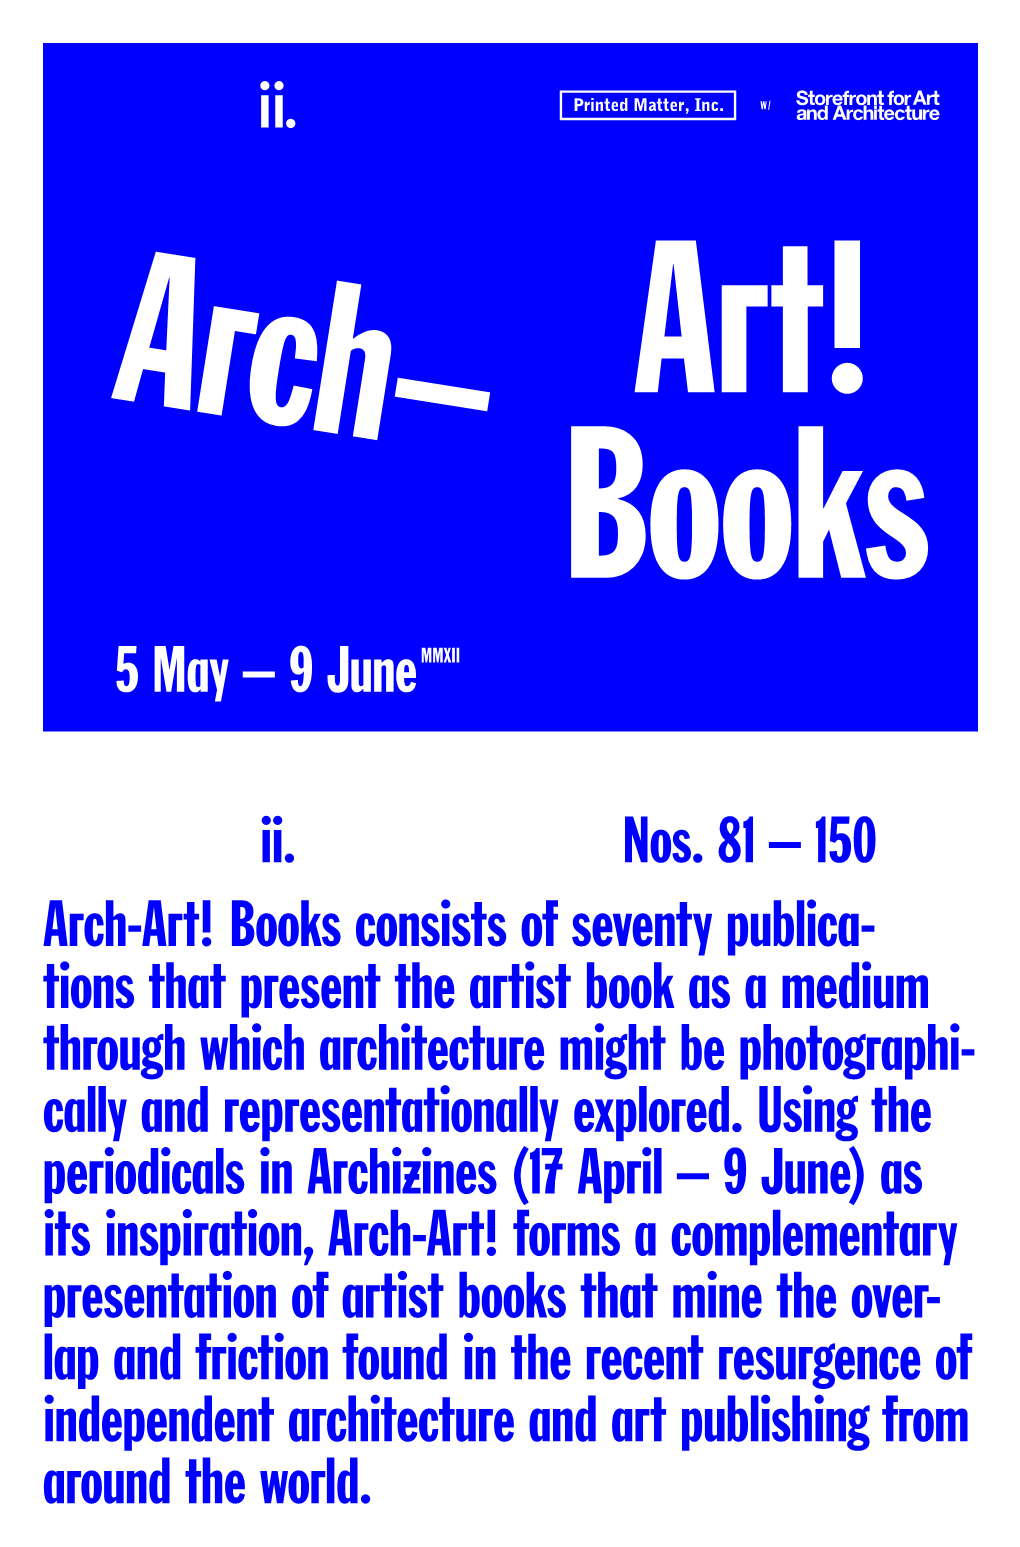 Art-Art Books Catalogue Graphic Design by Benjamin Critton